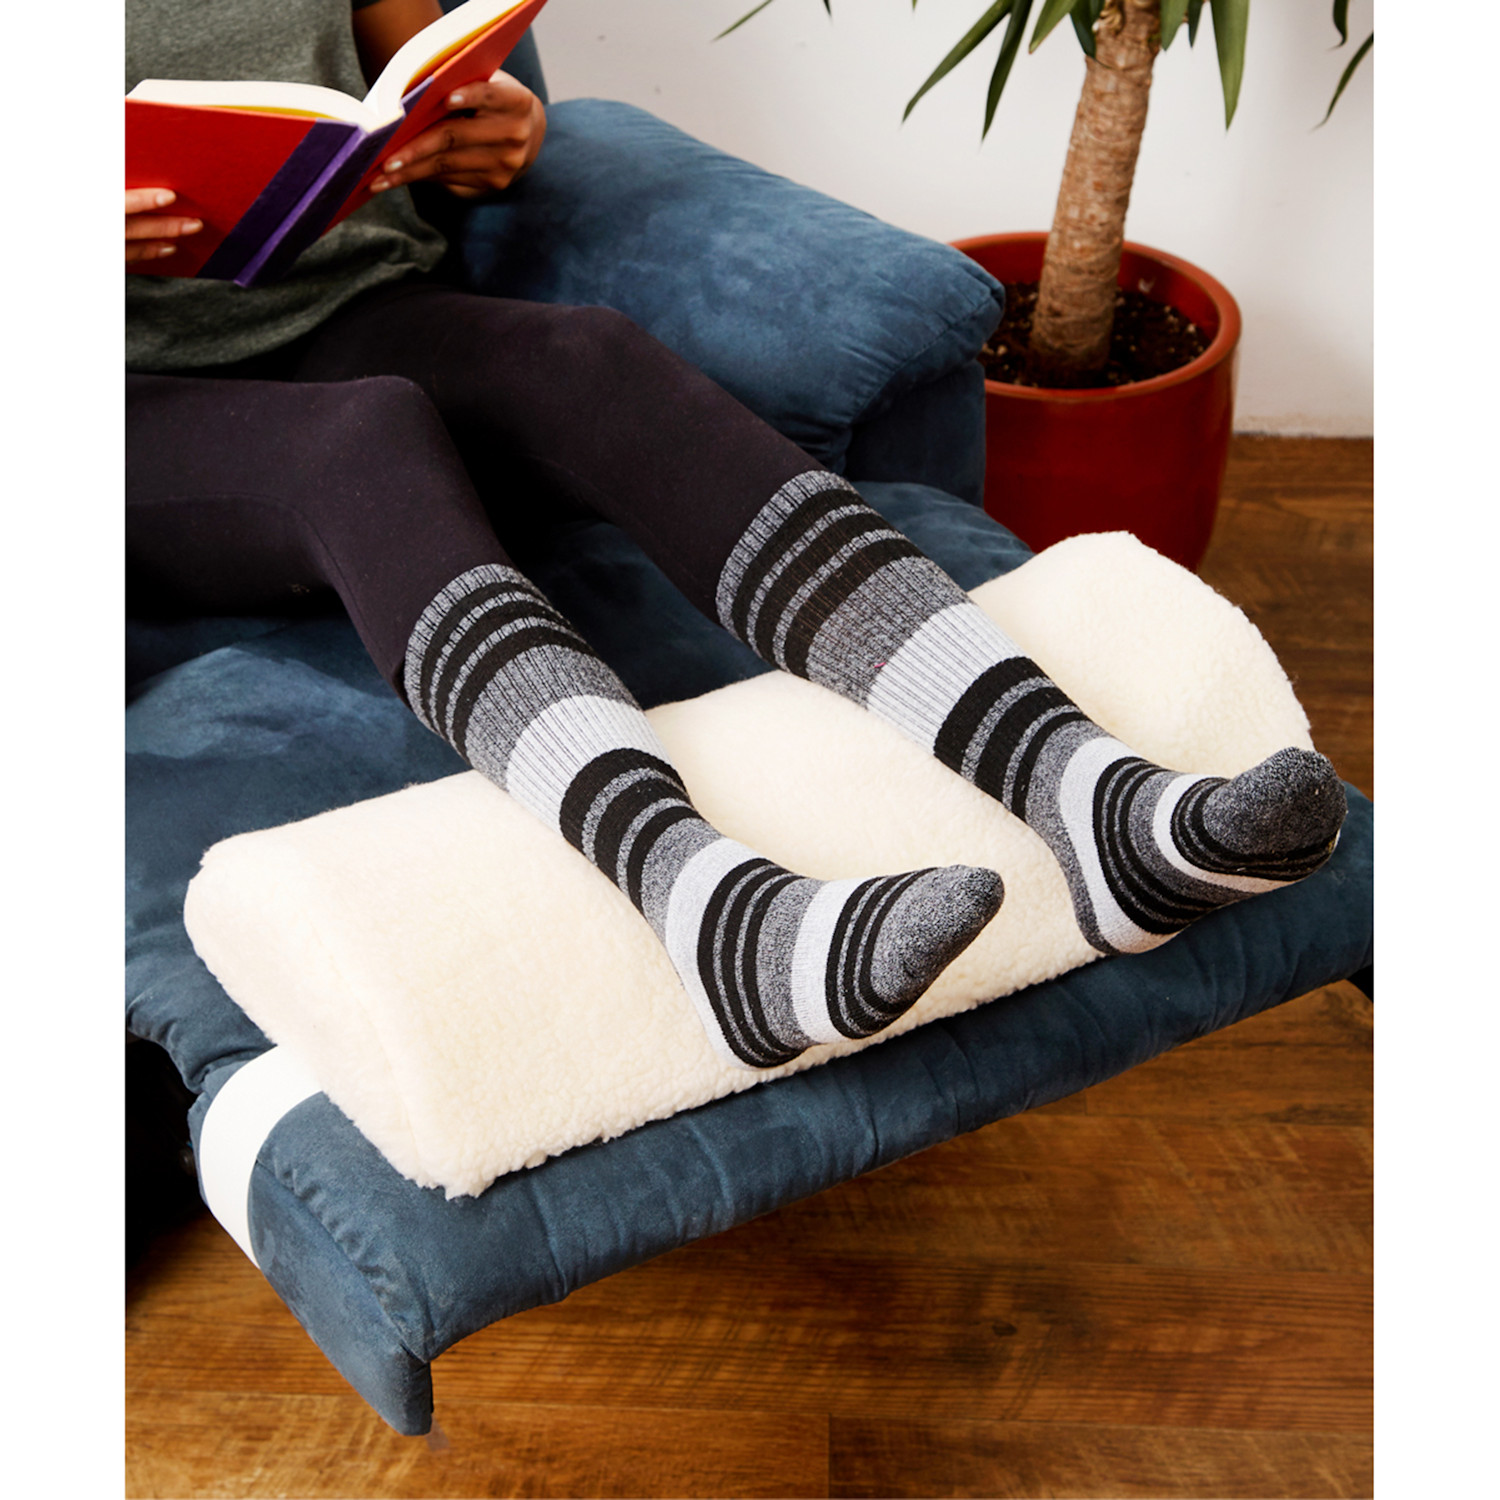 Recliner Leg Rest Cushion - Khaki